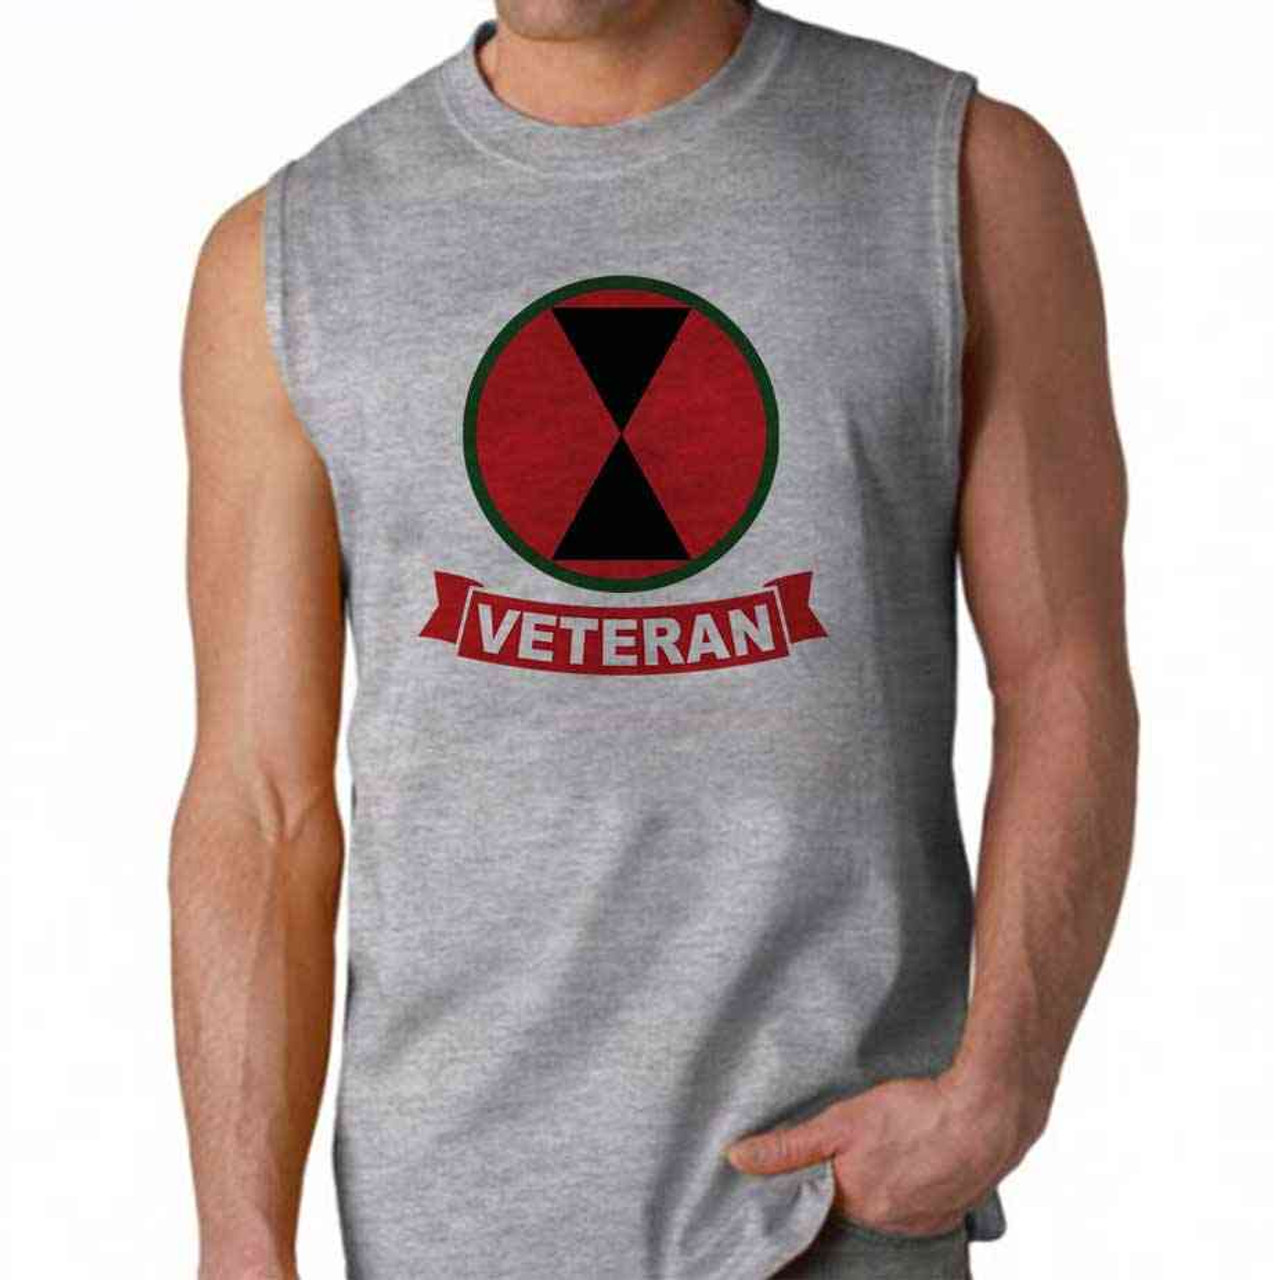 army 7th infantry division veteran sleeveless shirt